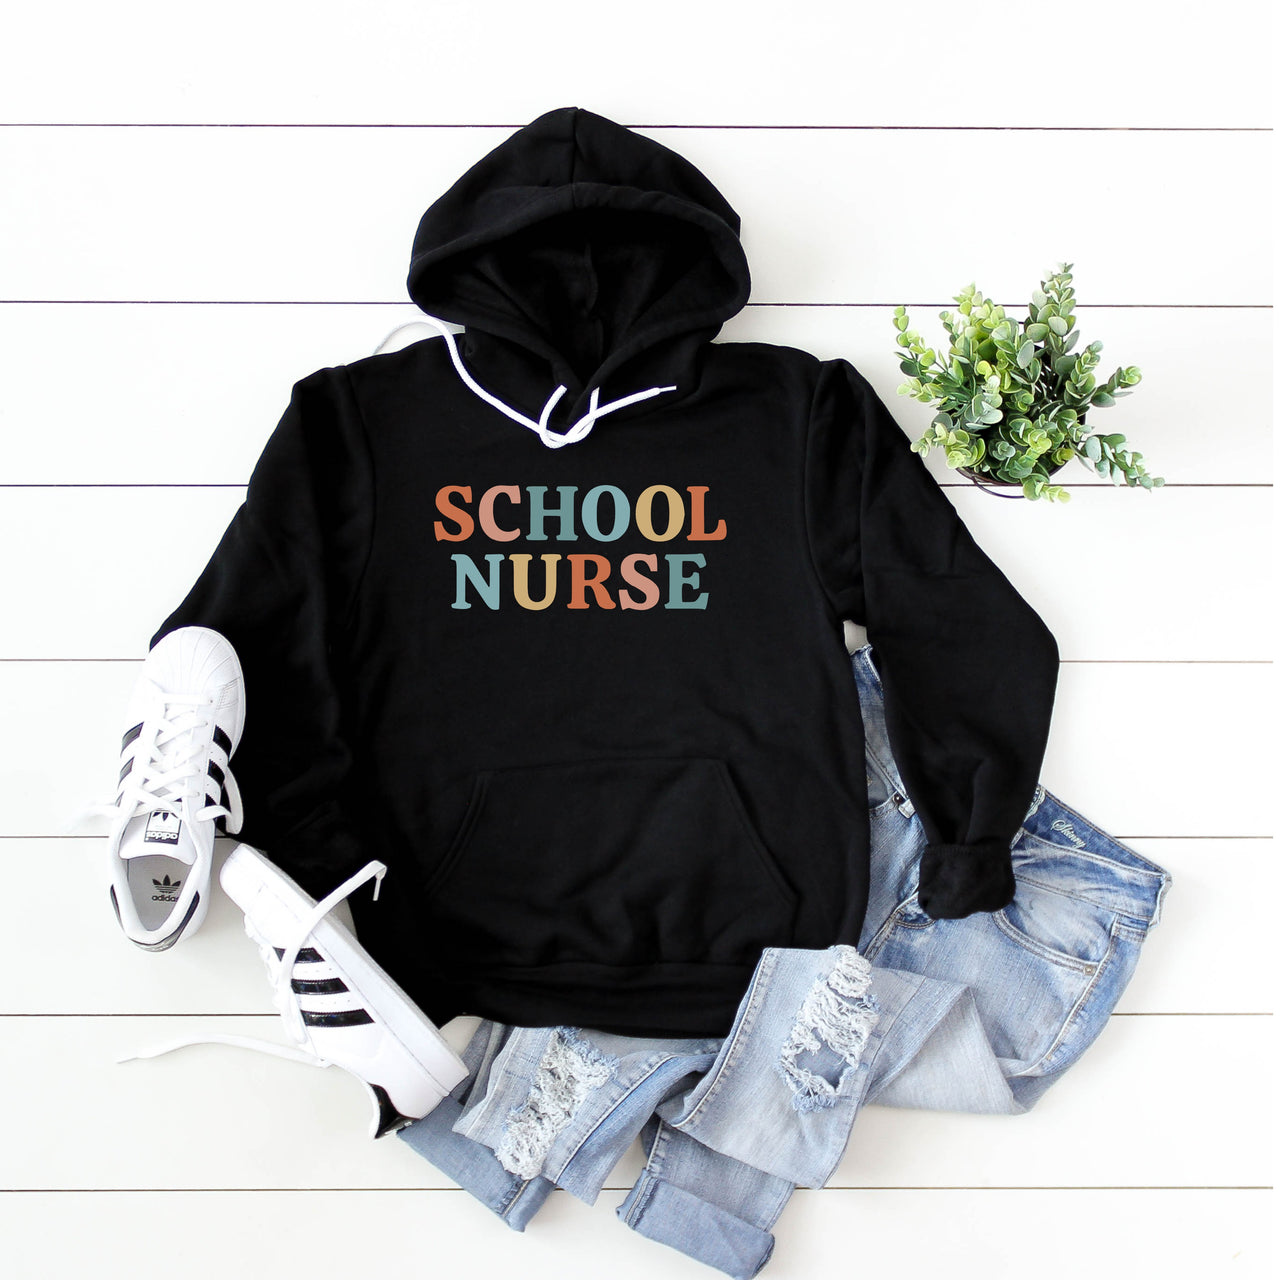 Adult - Unisex Hooded Pullover Sweatshirt (Nurse Collection)